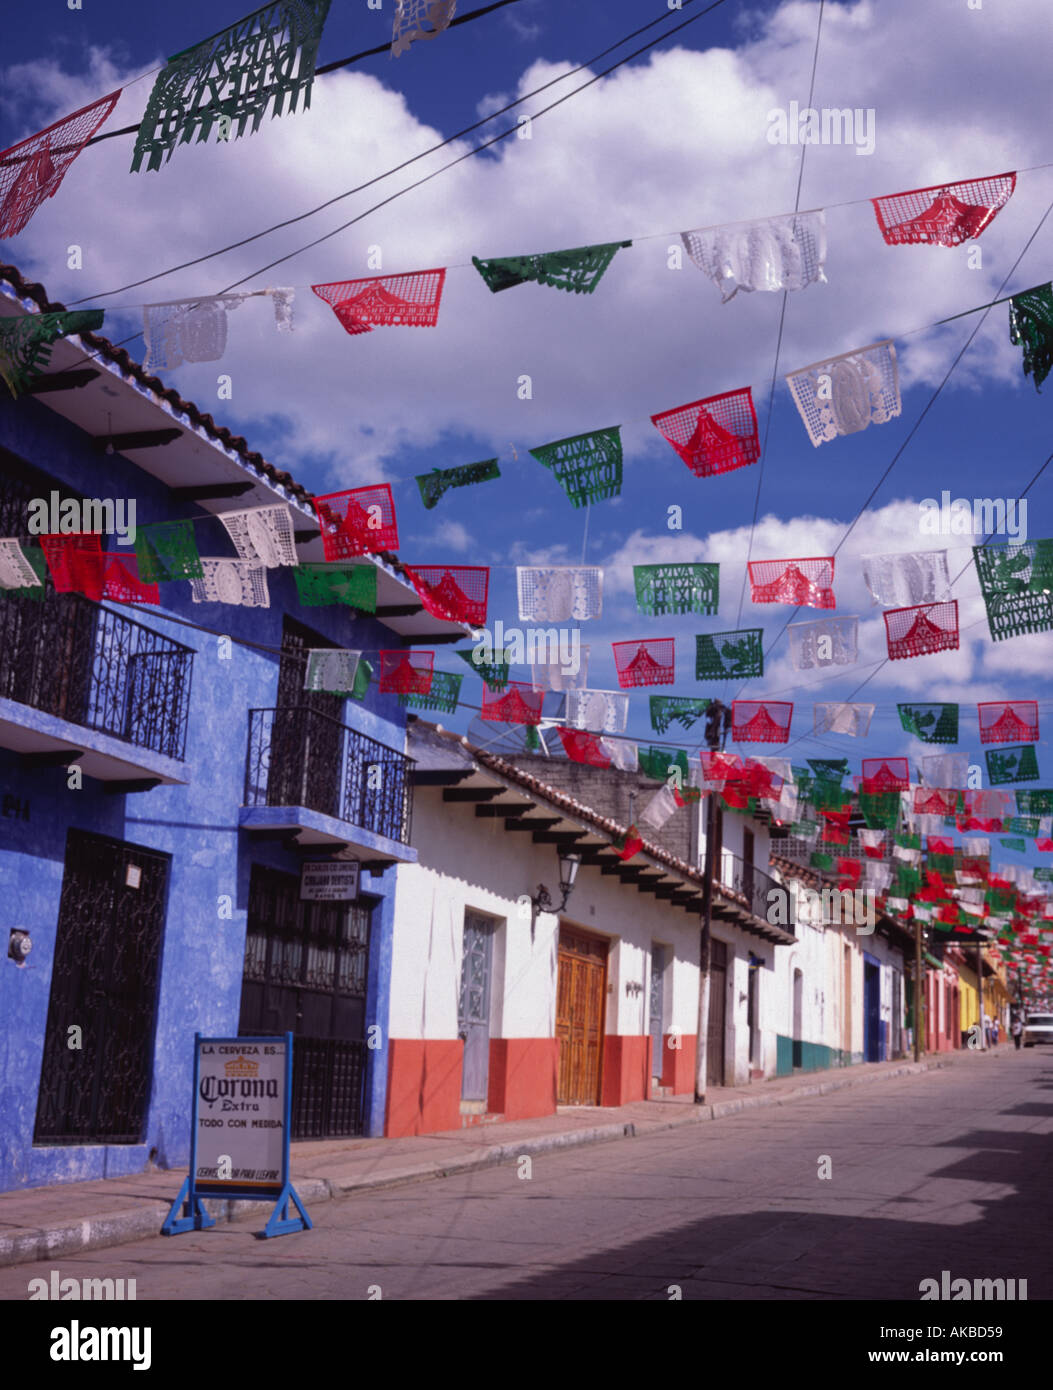 Calle decorada con banderas fotografías e imágenes de alta resolución -  Alamy